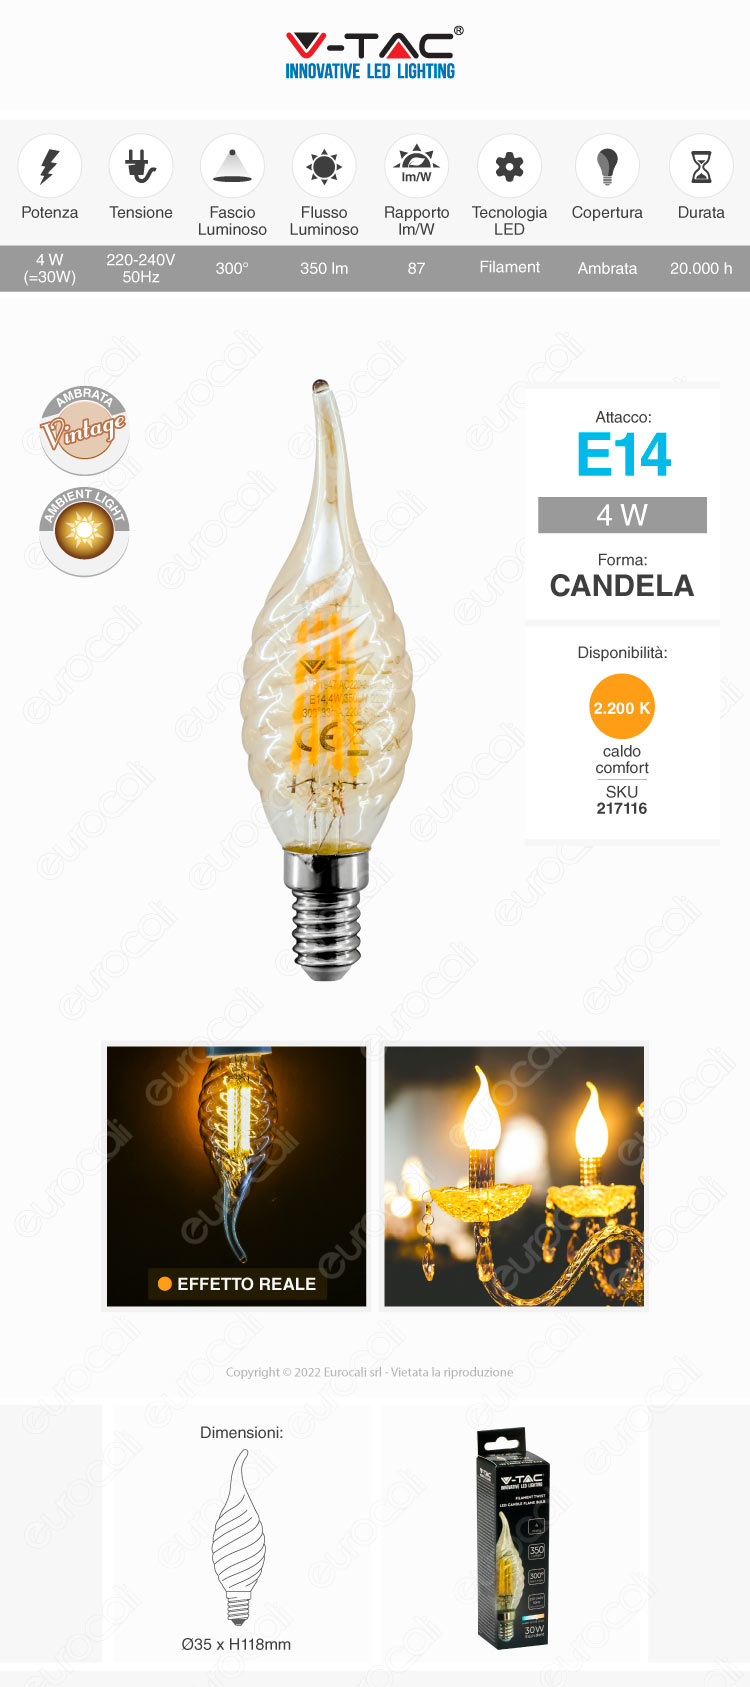 v-tac vt-1947 lampadina led e14 4w candle flame bulb c35 twist filament amber glass